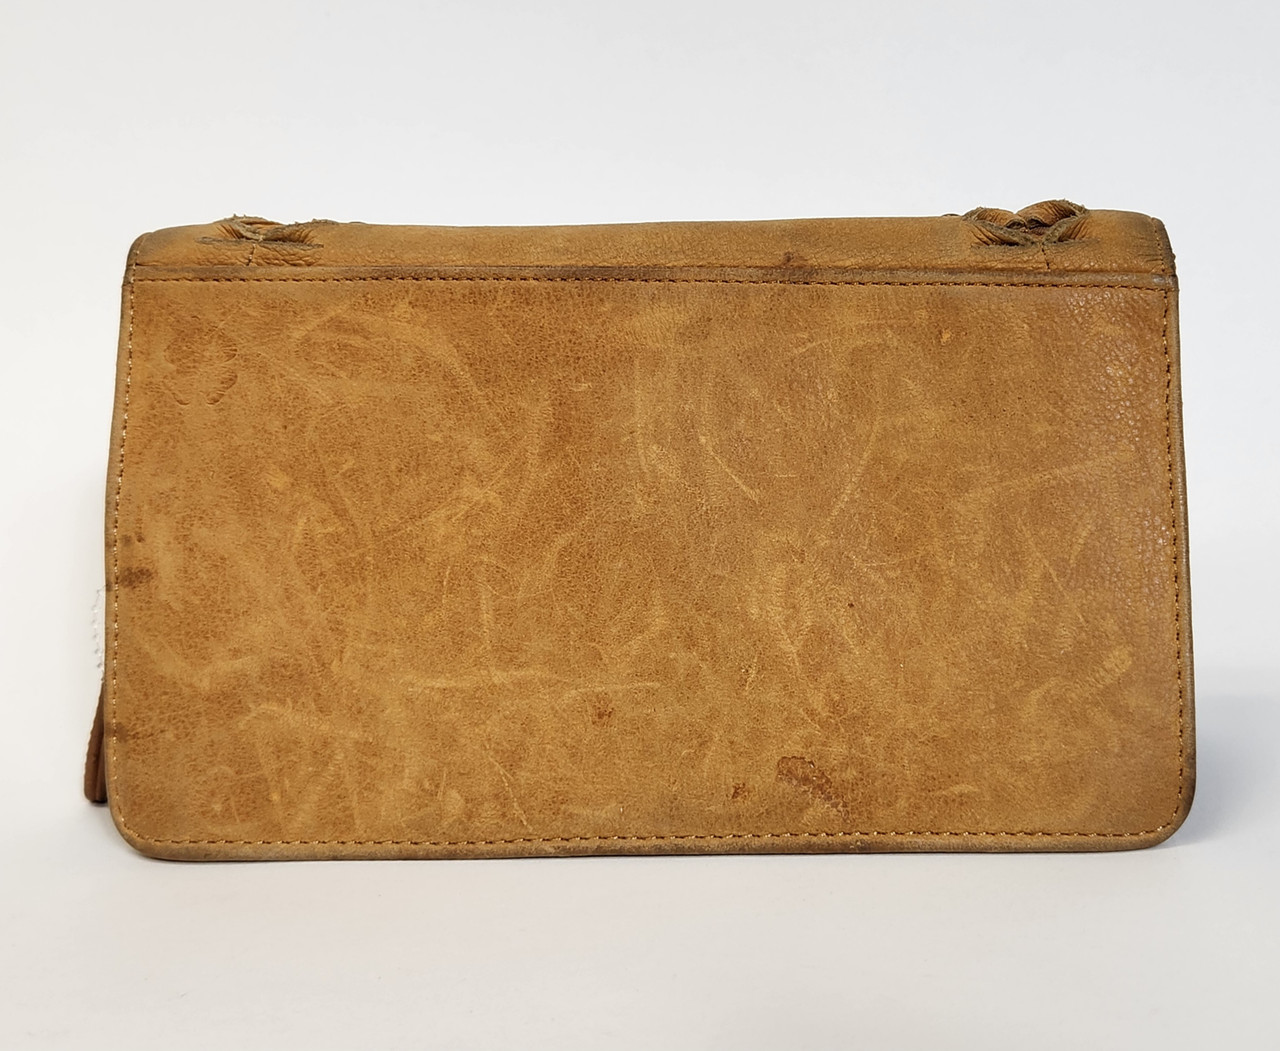 Lucky Brand Koda Crossbody Bag/Purse in Topenga Tan Brown Leather NWOT $148  | eBay